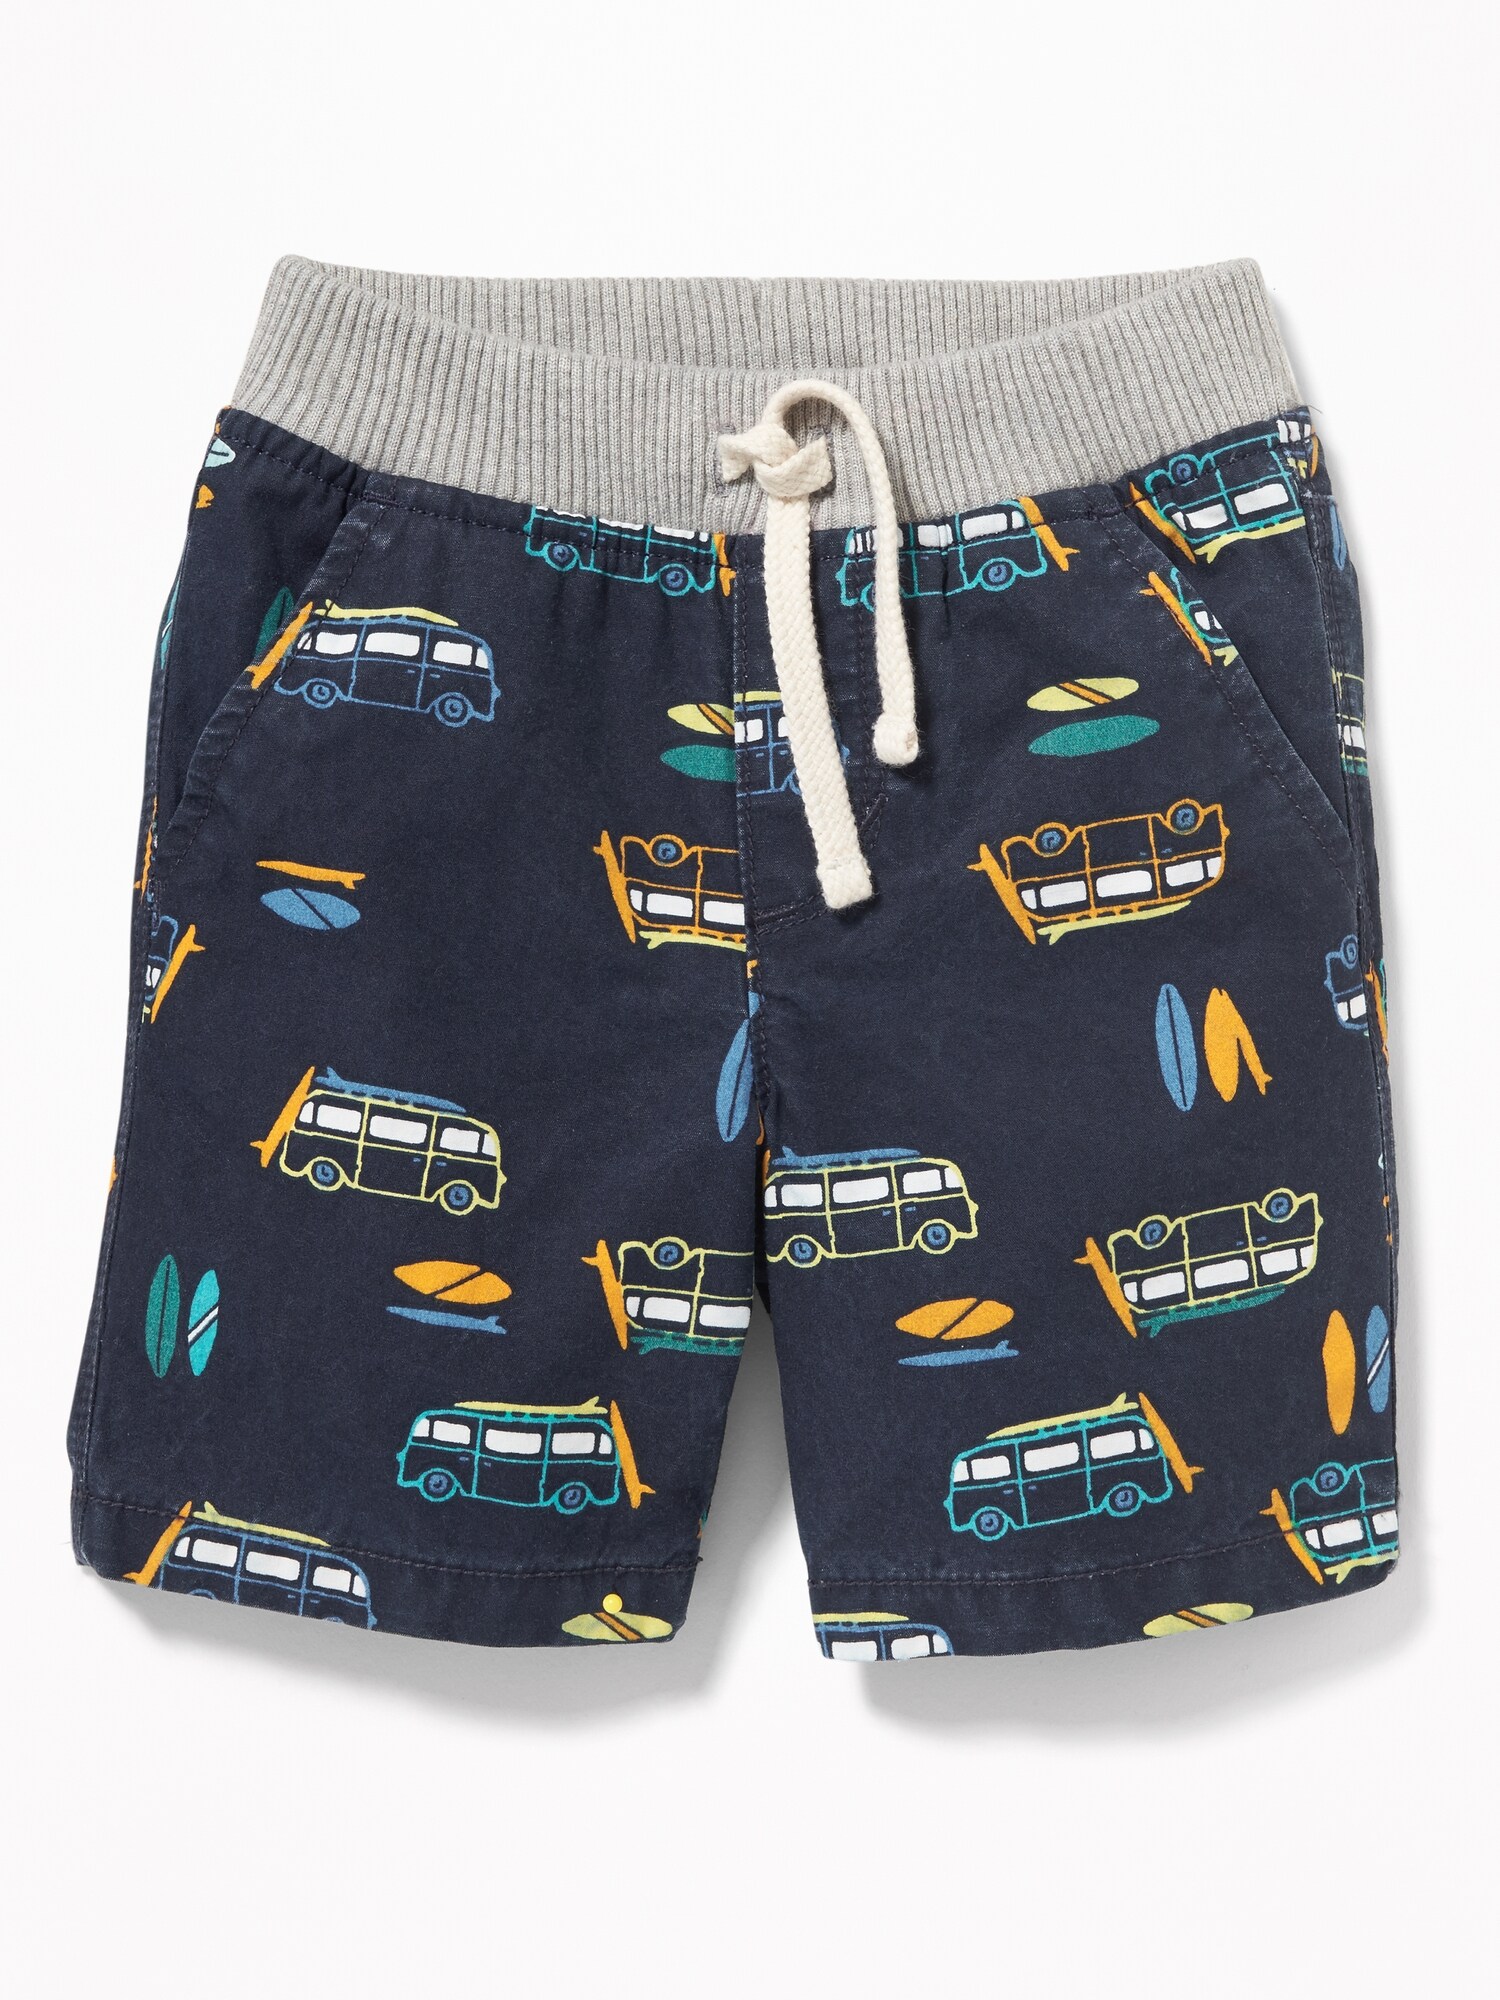 Rib-Knit Waist Canvas Shorts for Toddler Boys | Old Navy